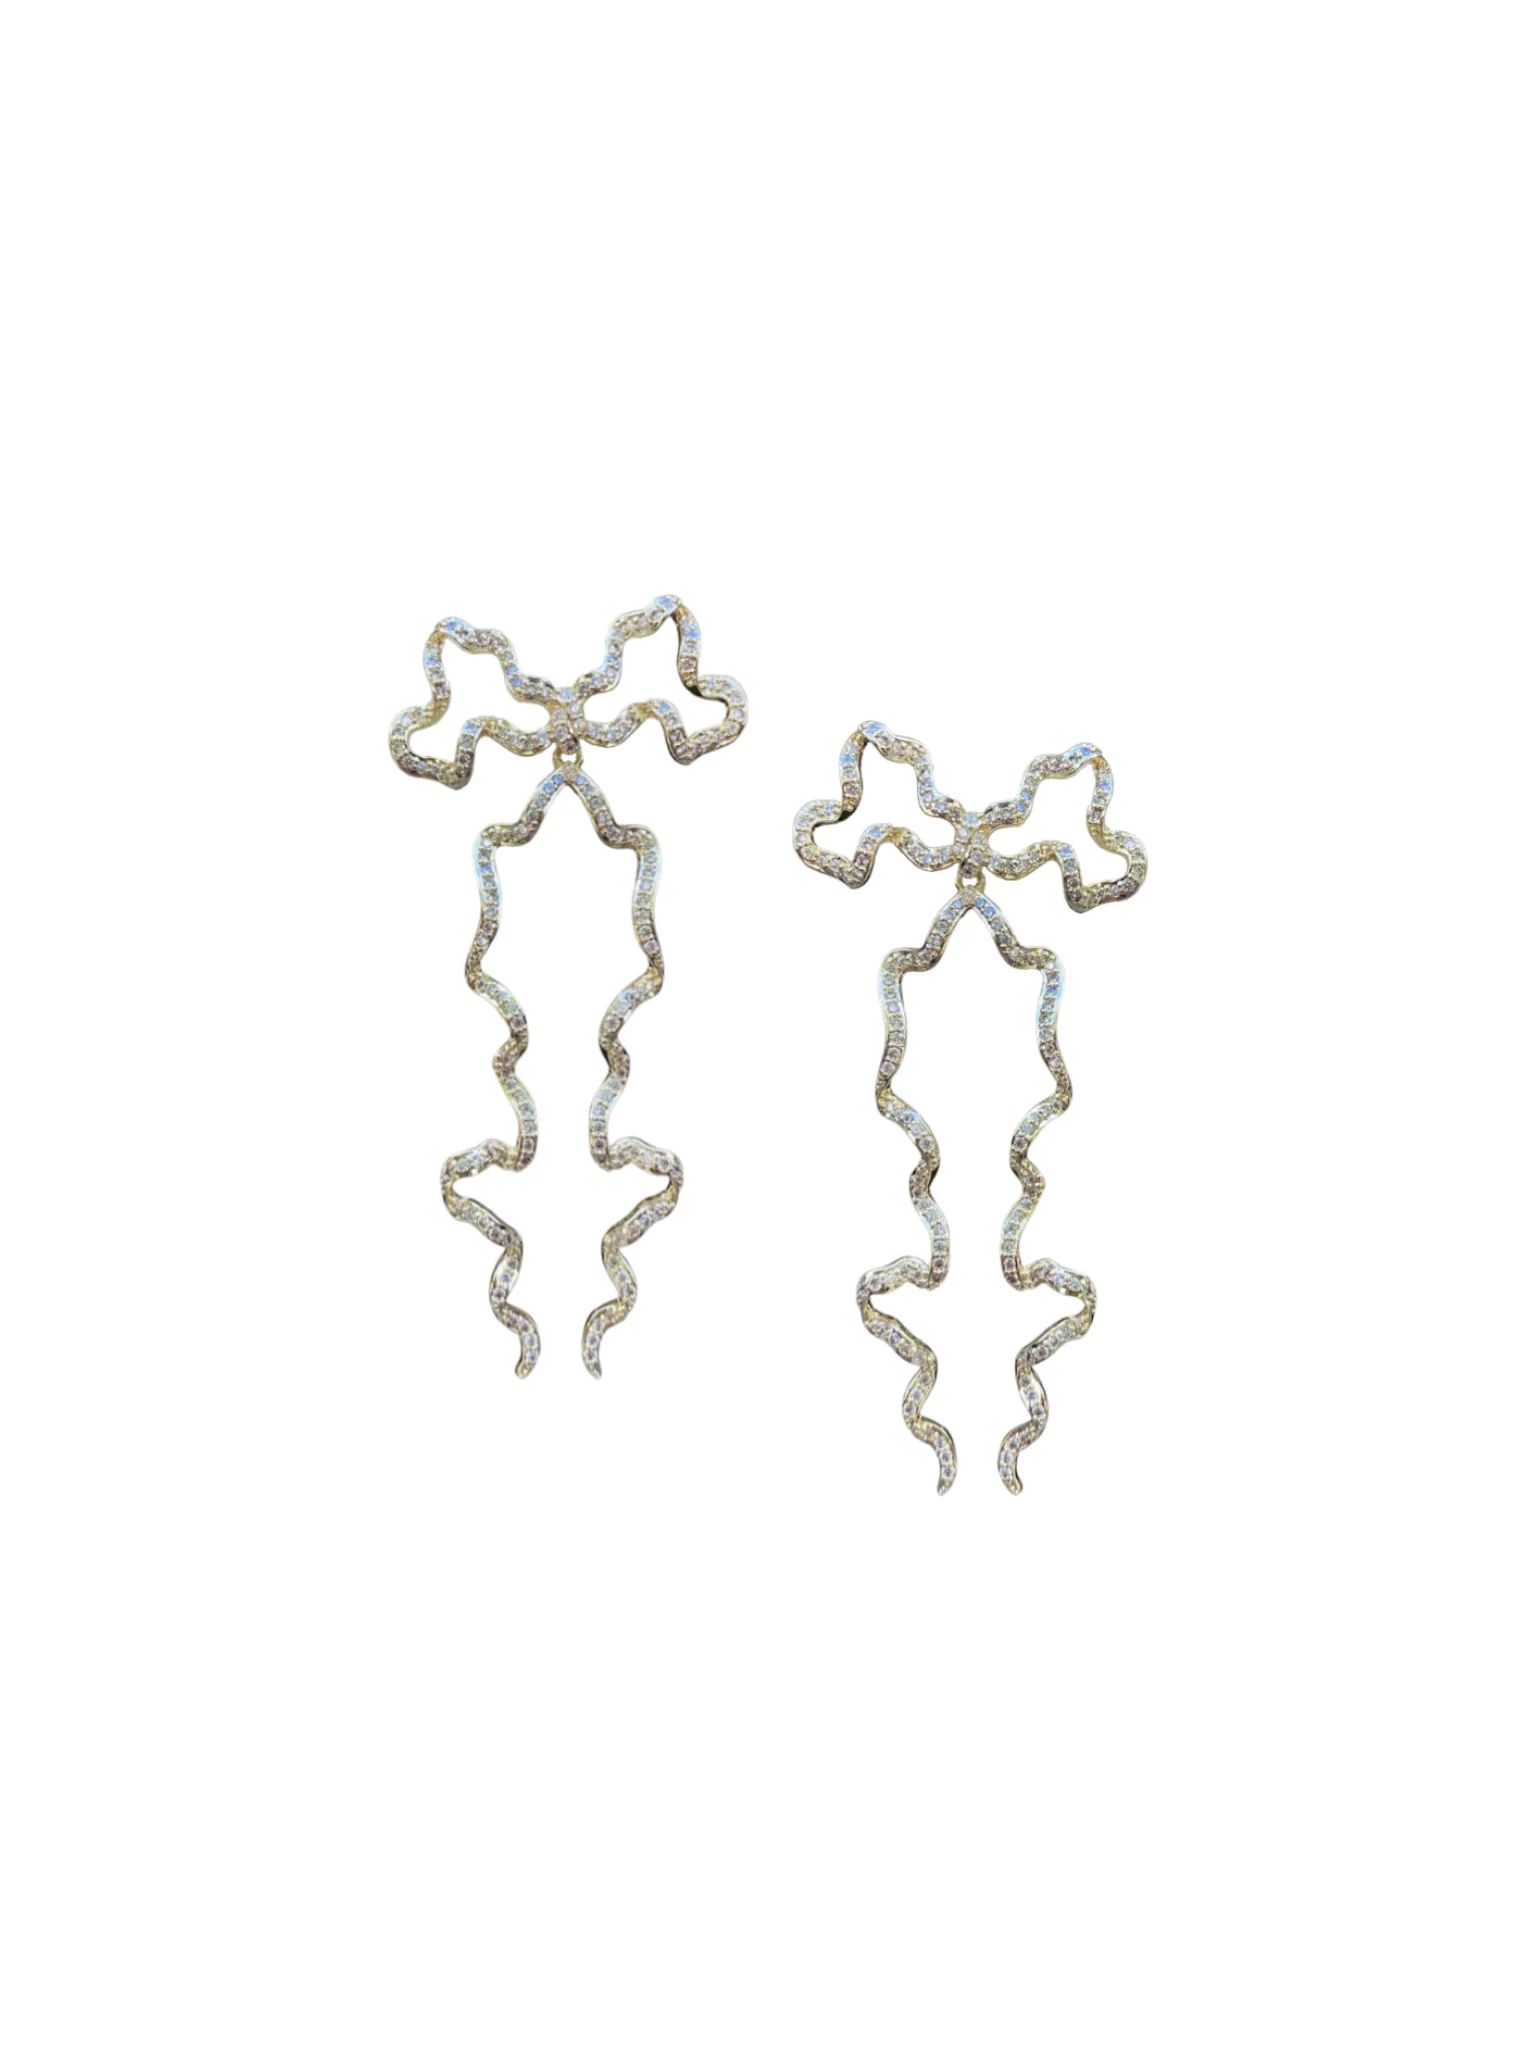 Embellished Bows Drops | Nicola Bathie Jewelry